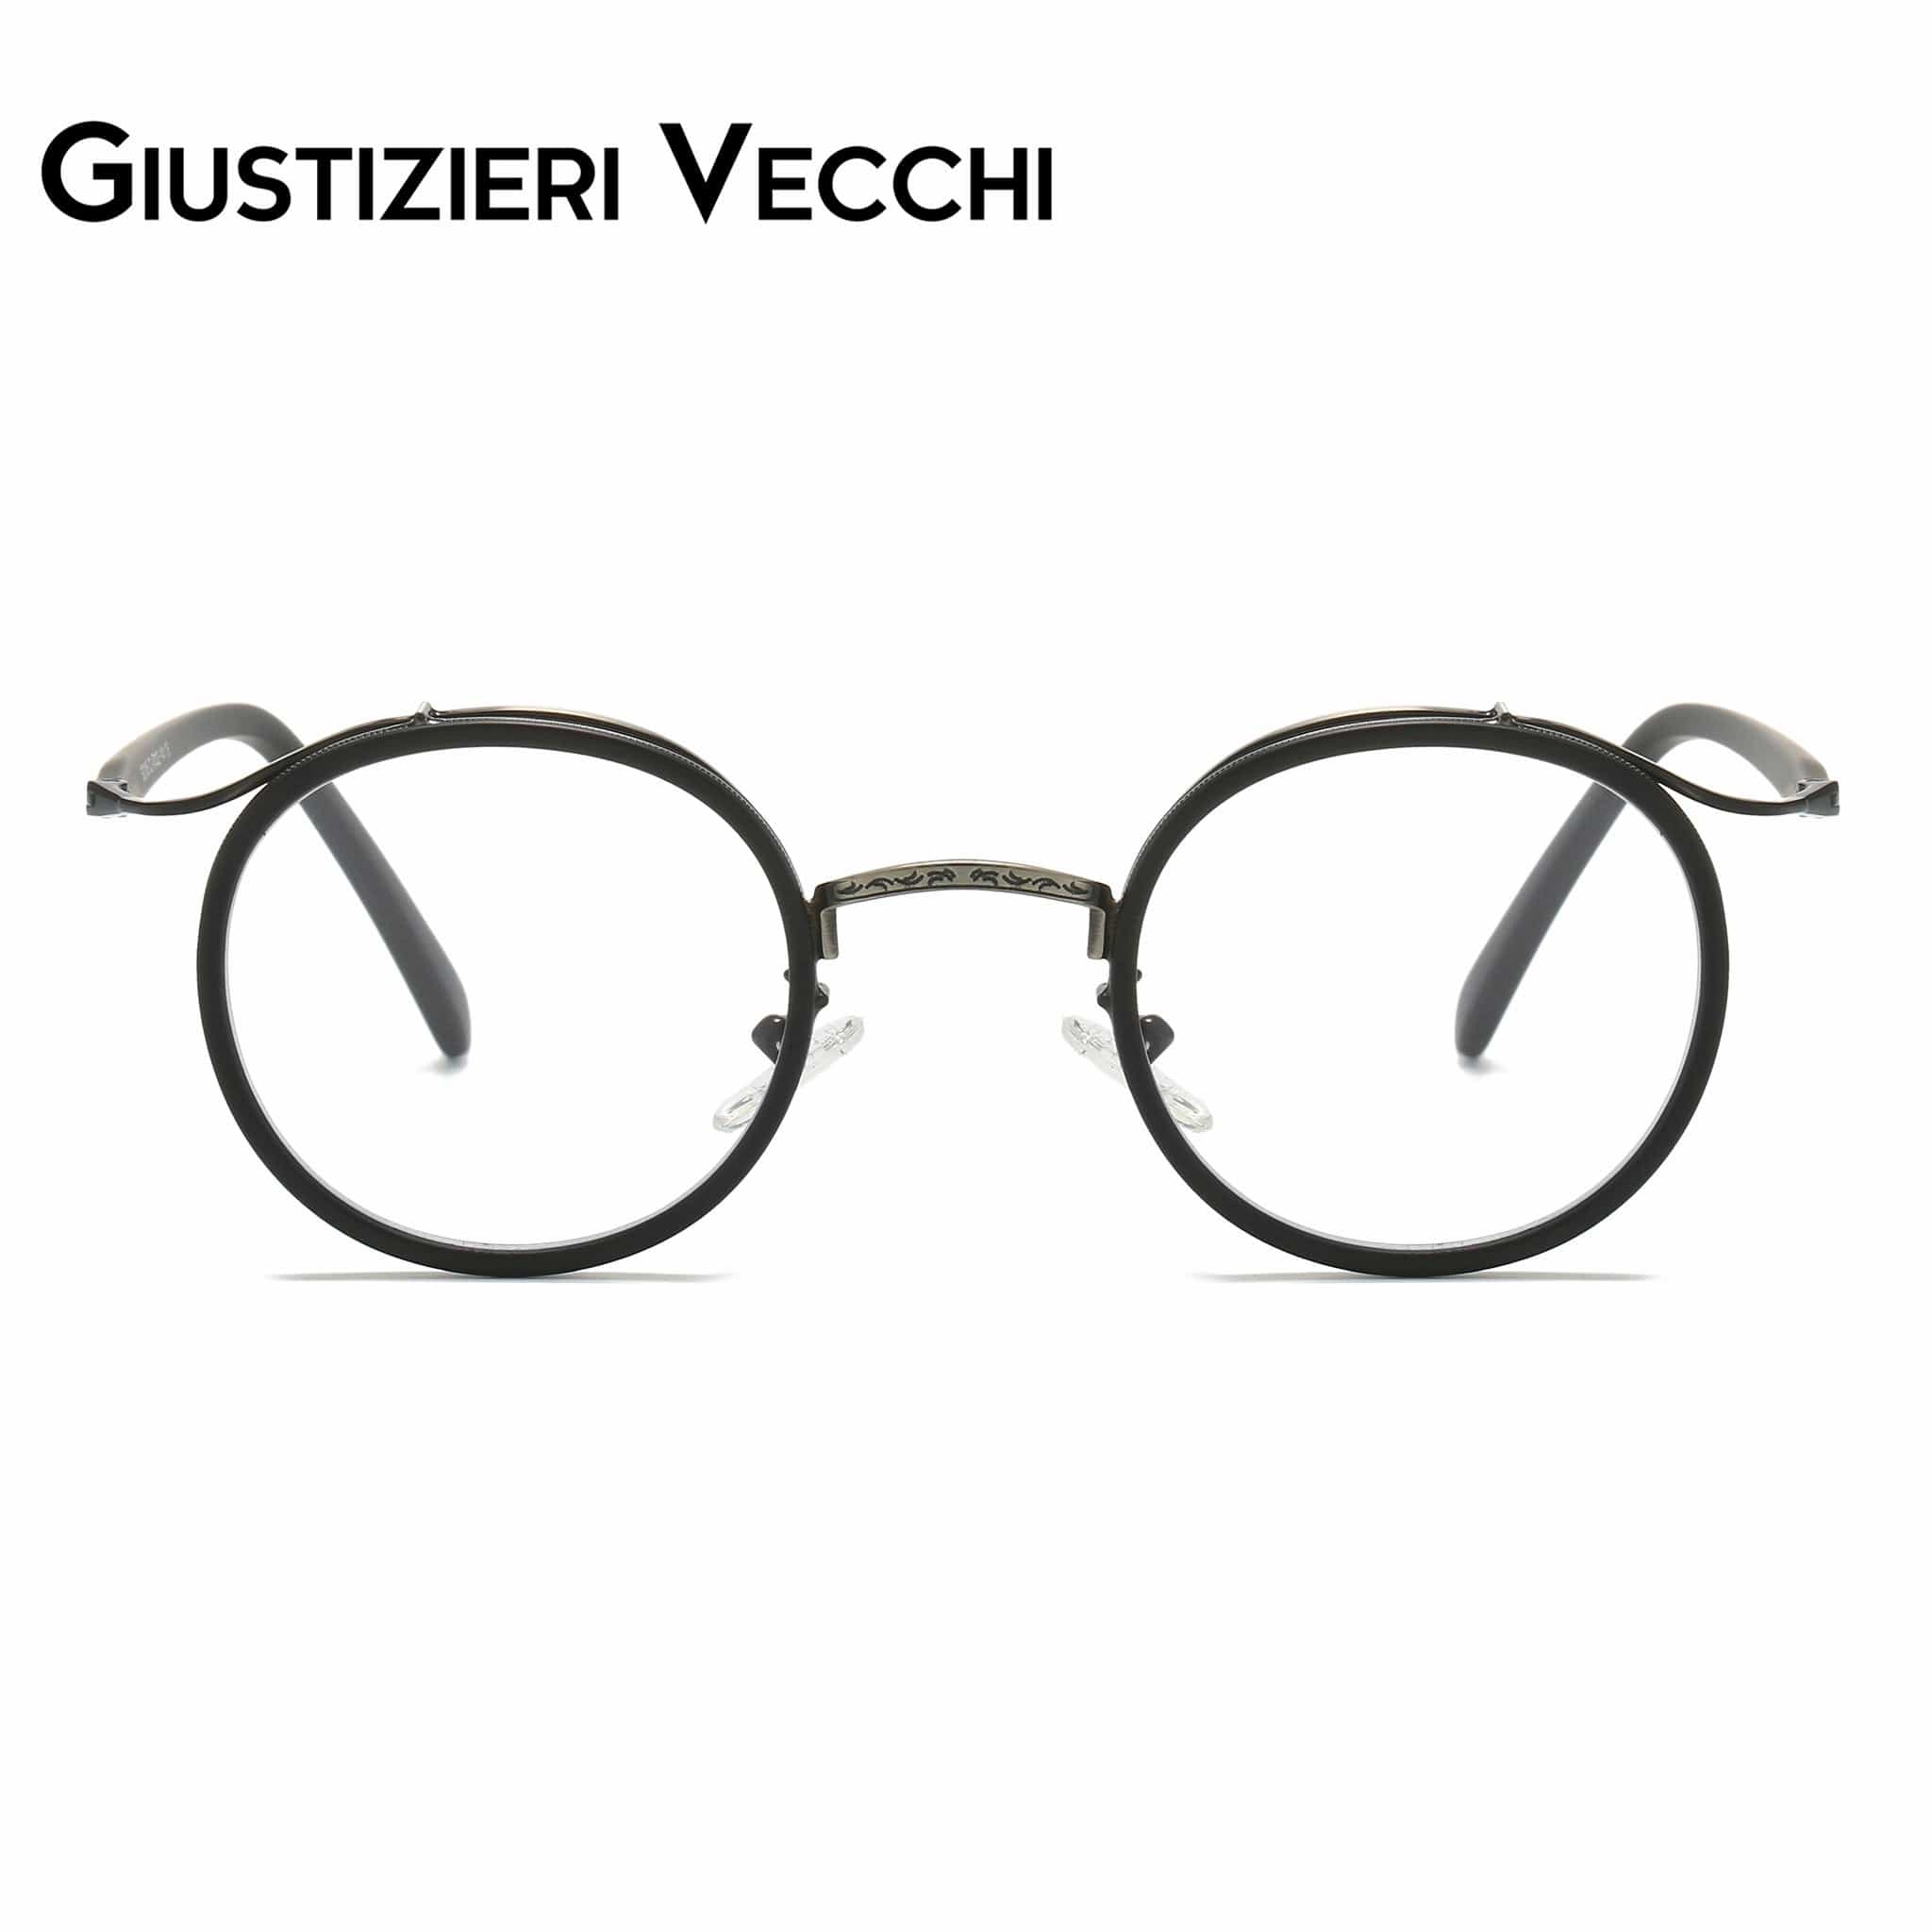 GIUSTIZIERI VECCHI Eyeglasses Small / Brushed Gunmatal Grapevine Duo